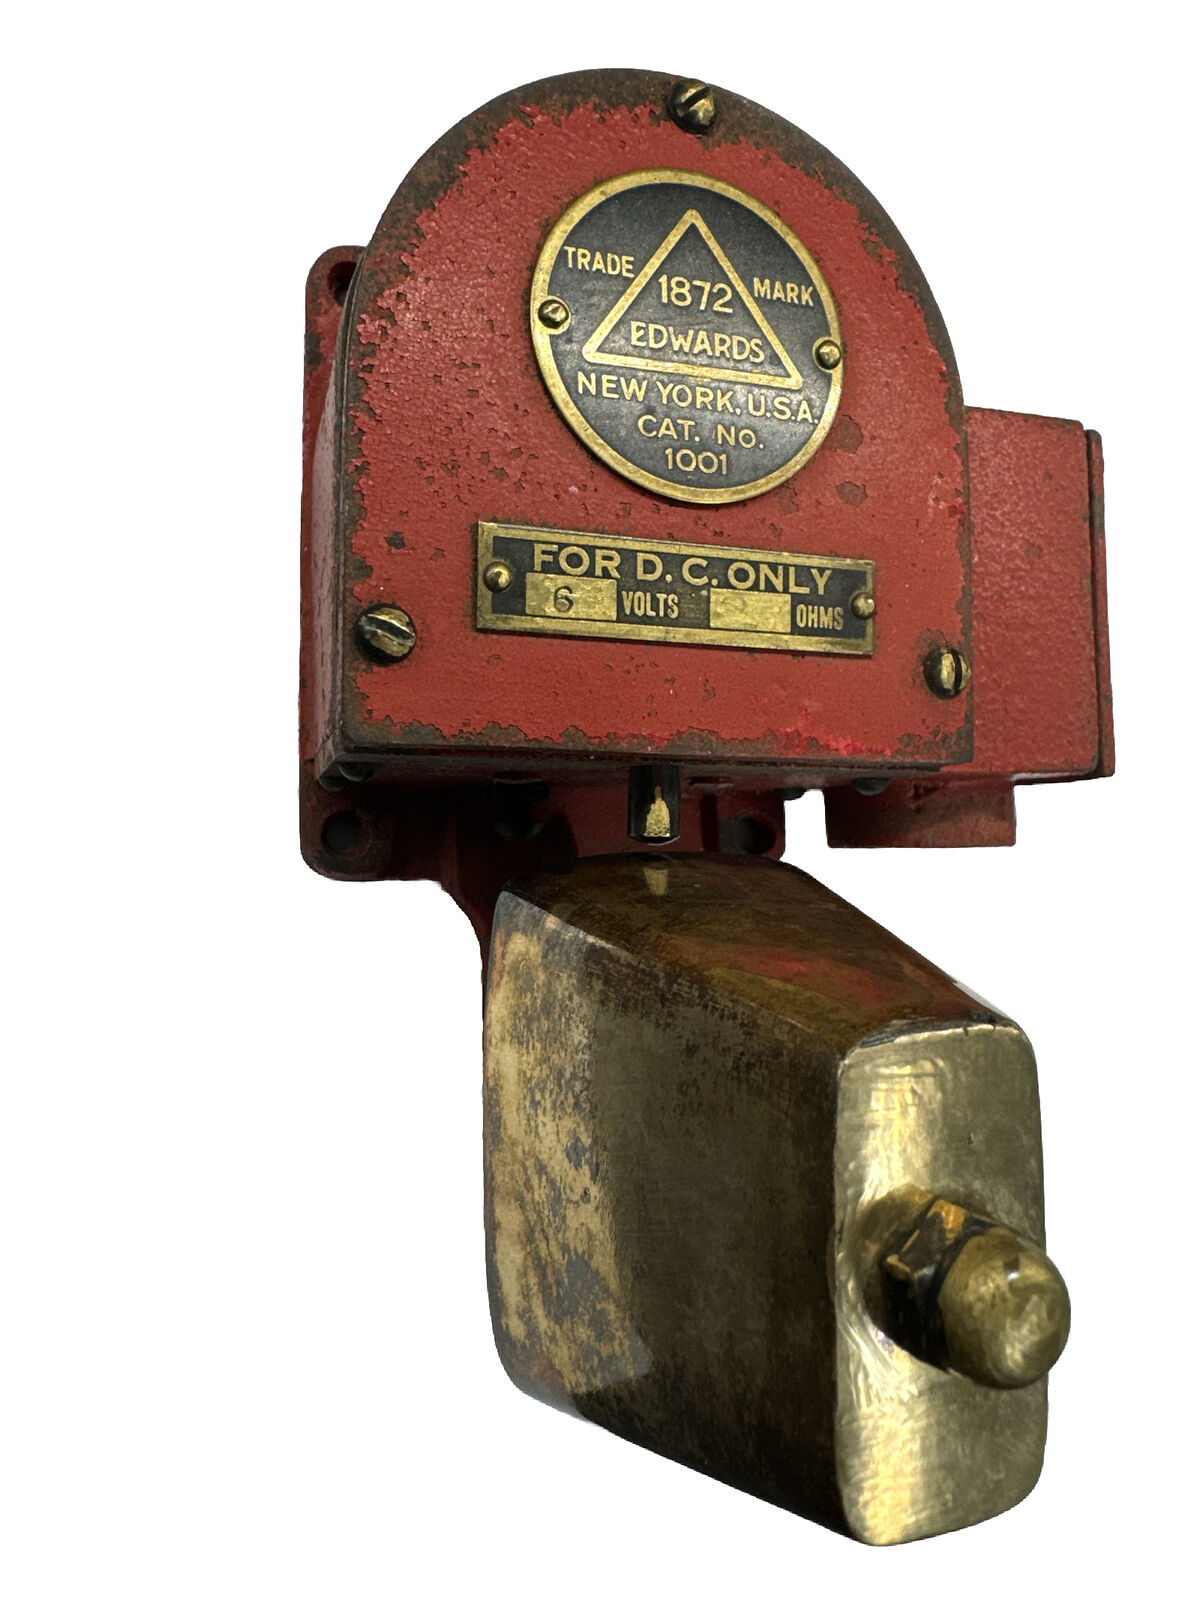 Vintage Extremely RARE Fire Alarm Bell Edwards 1872 6v Dc CAT 1001 Retro